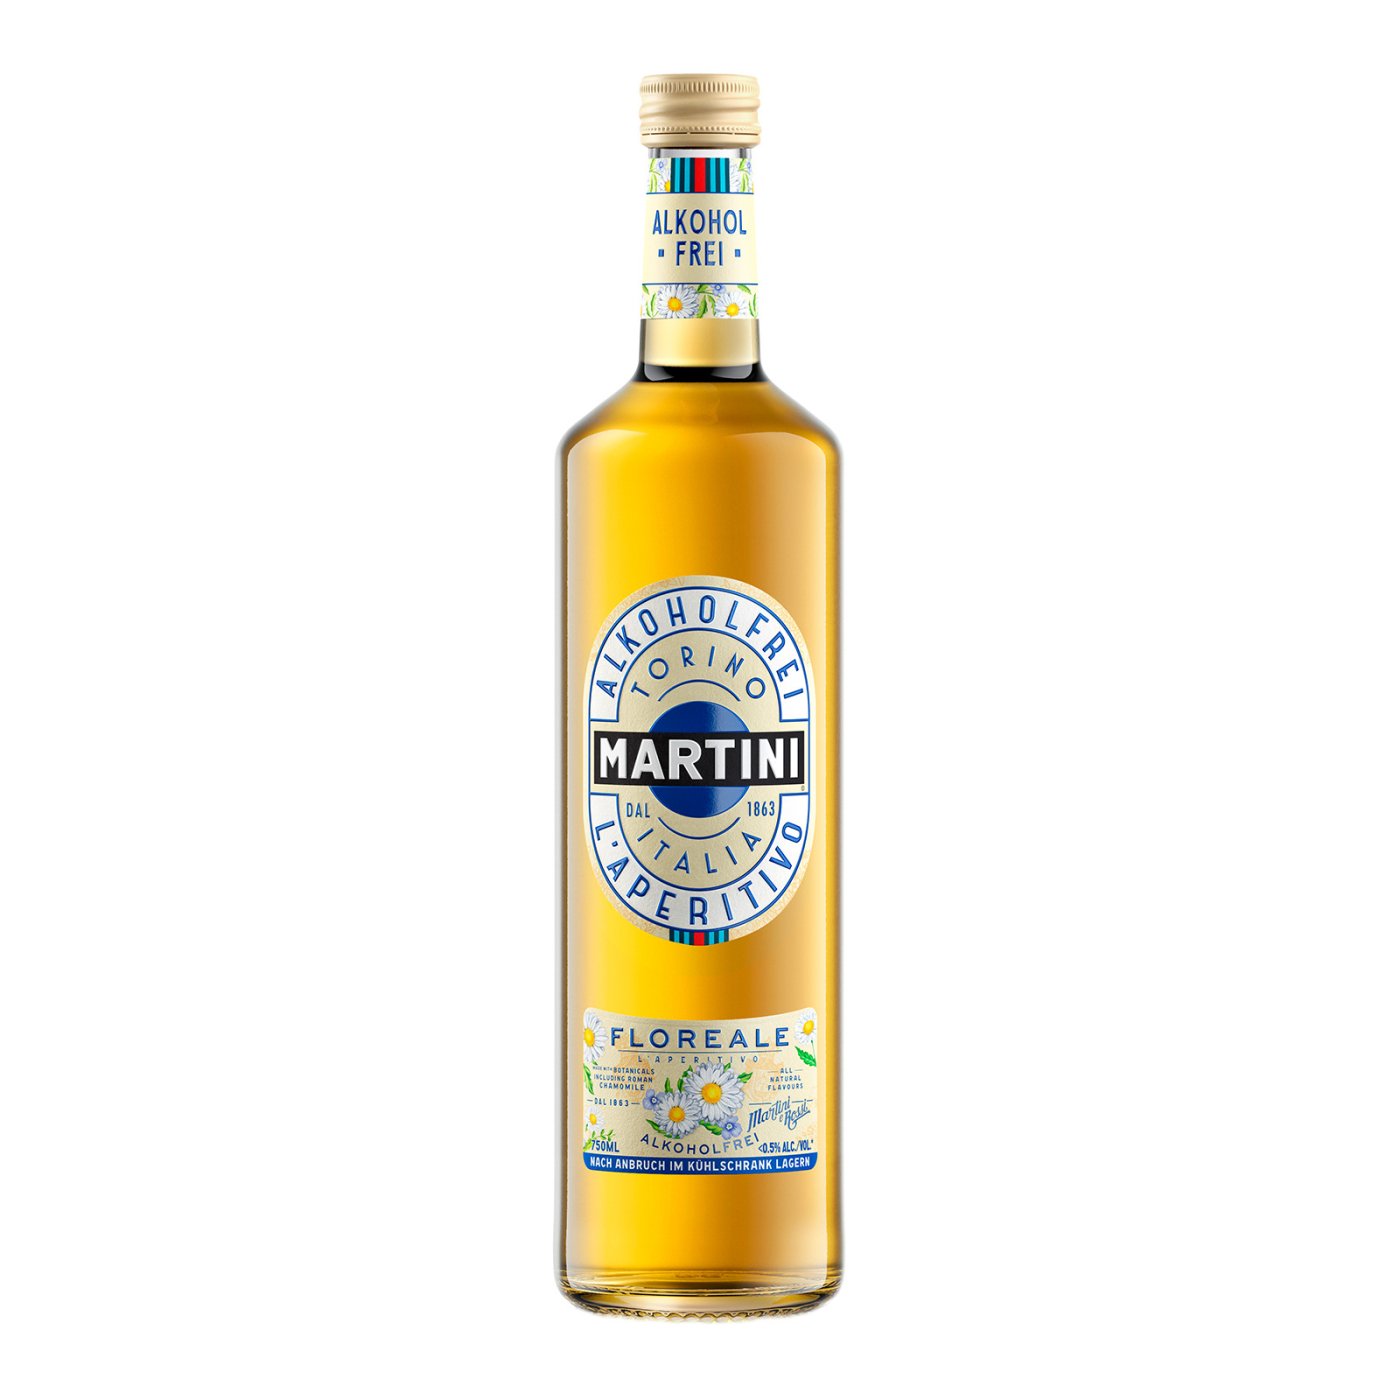 Martini - Floreale 75cl